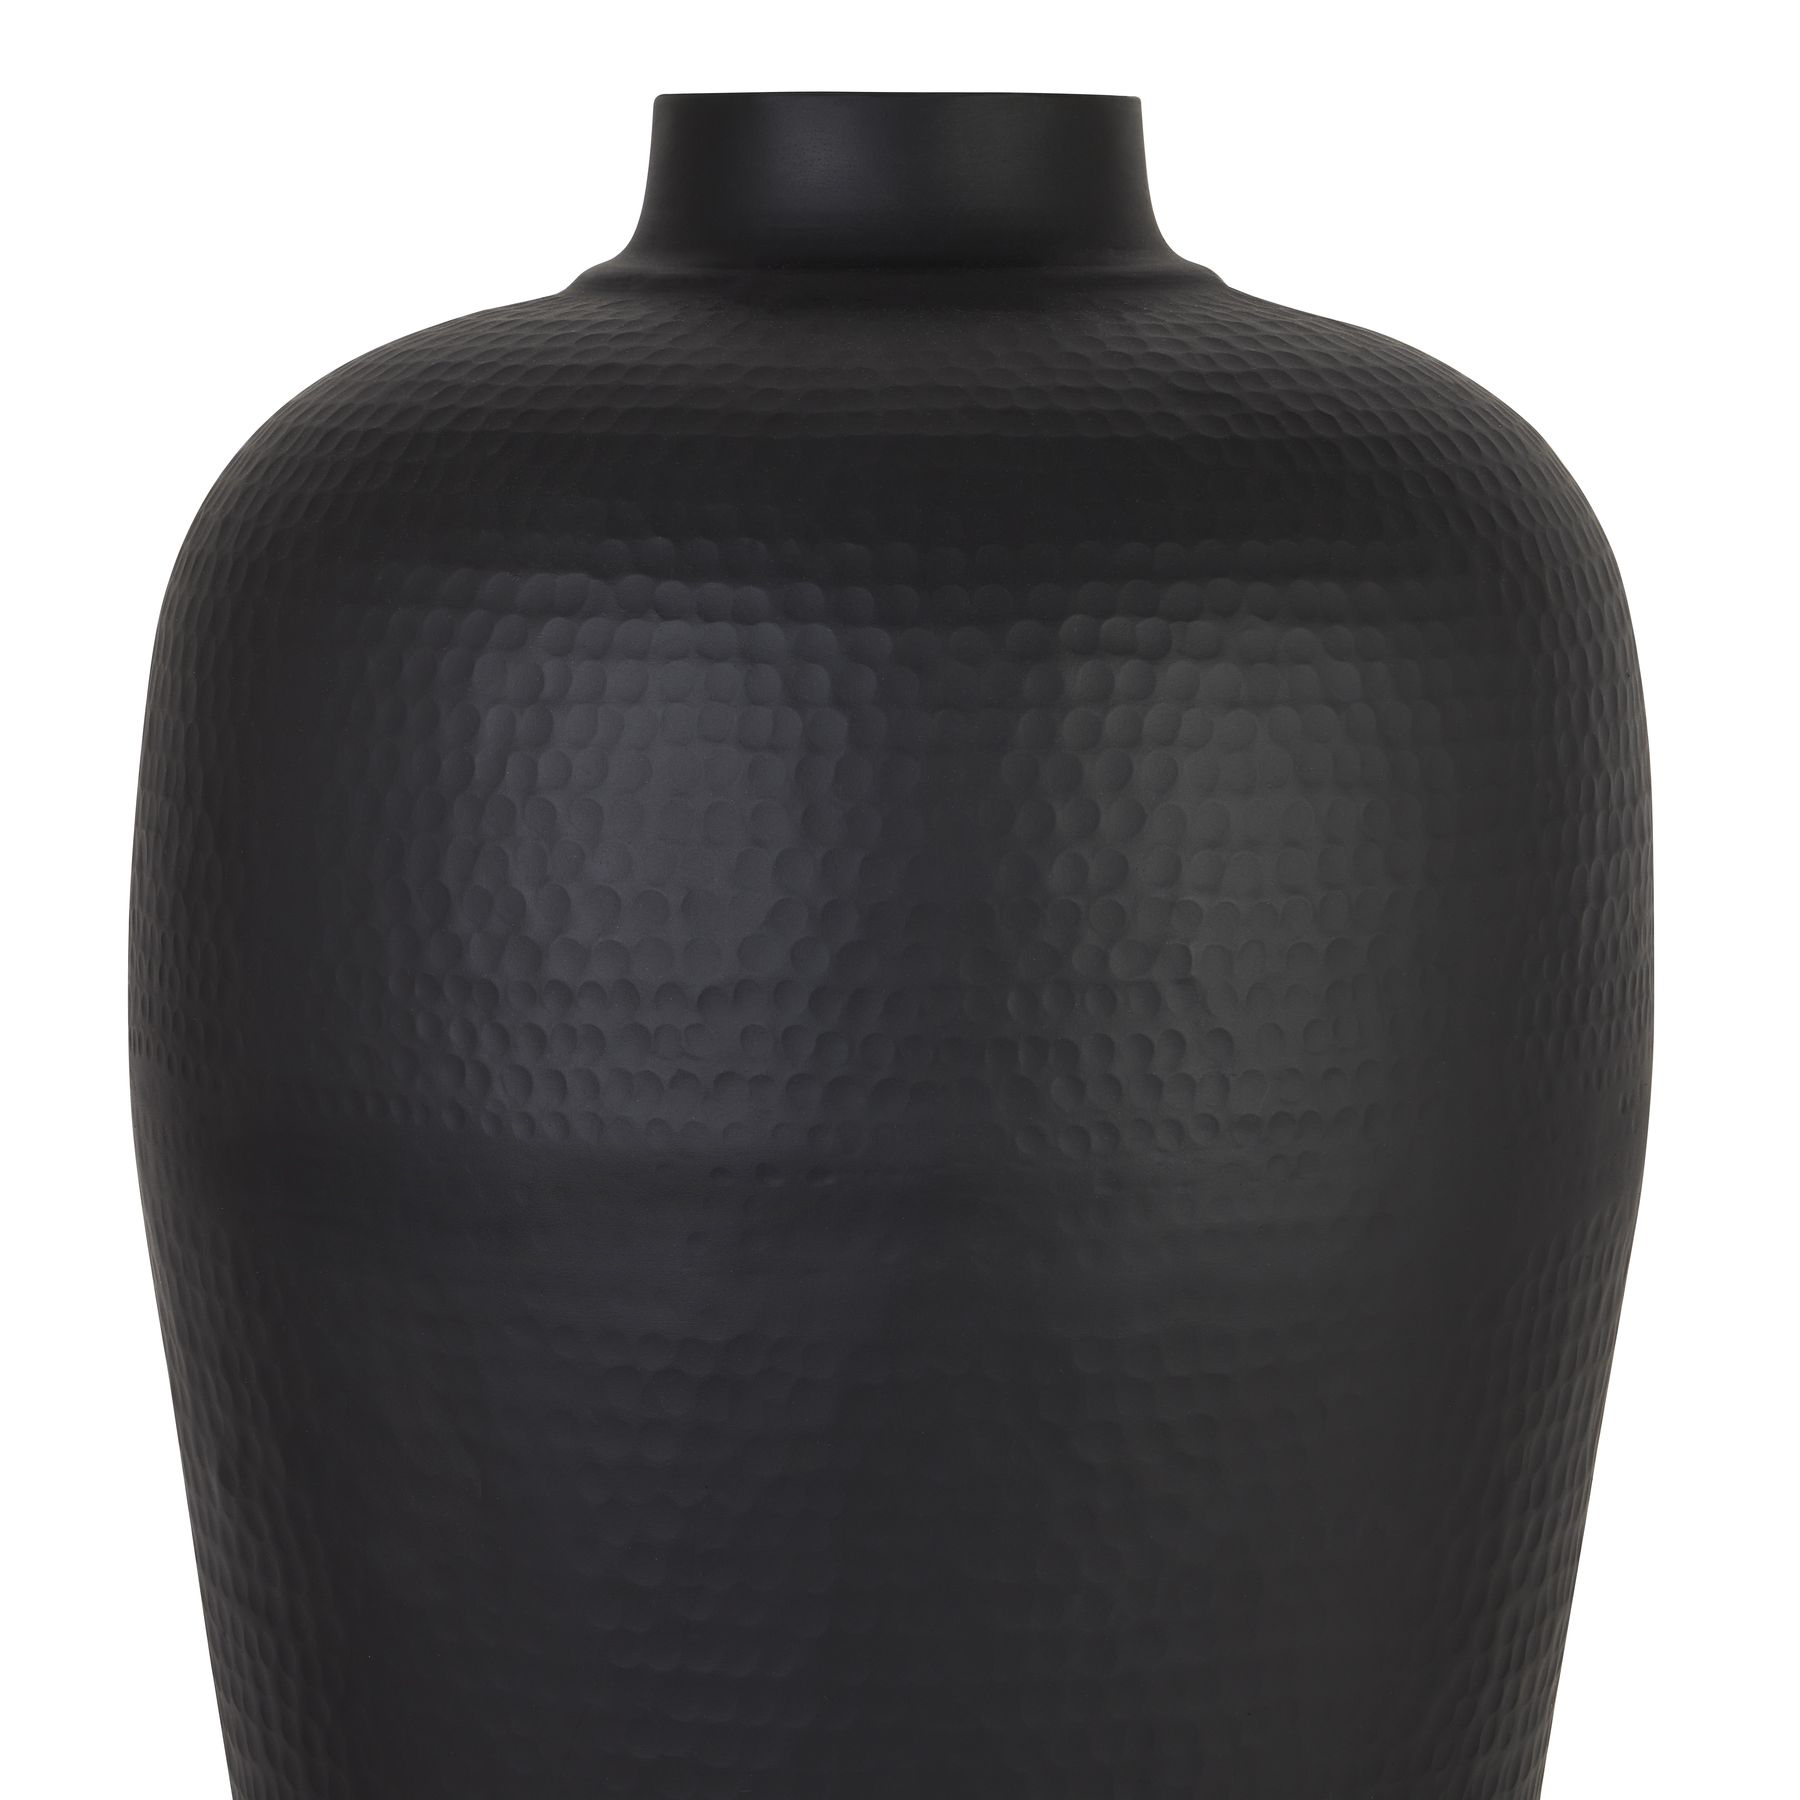 Matt Black Medium Hammered Vase Without Lid - Image 2